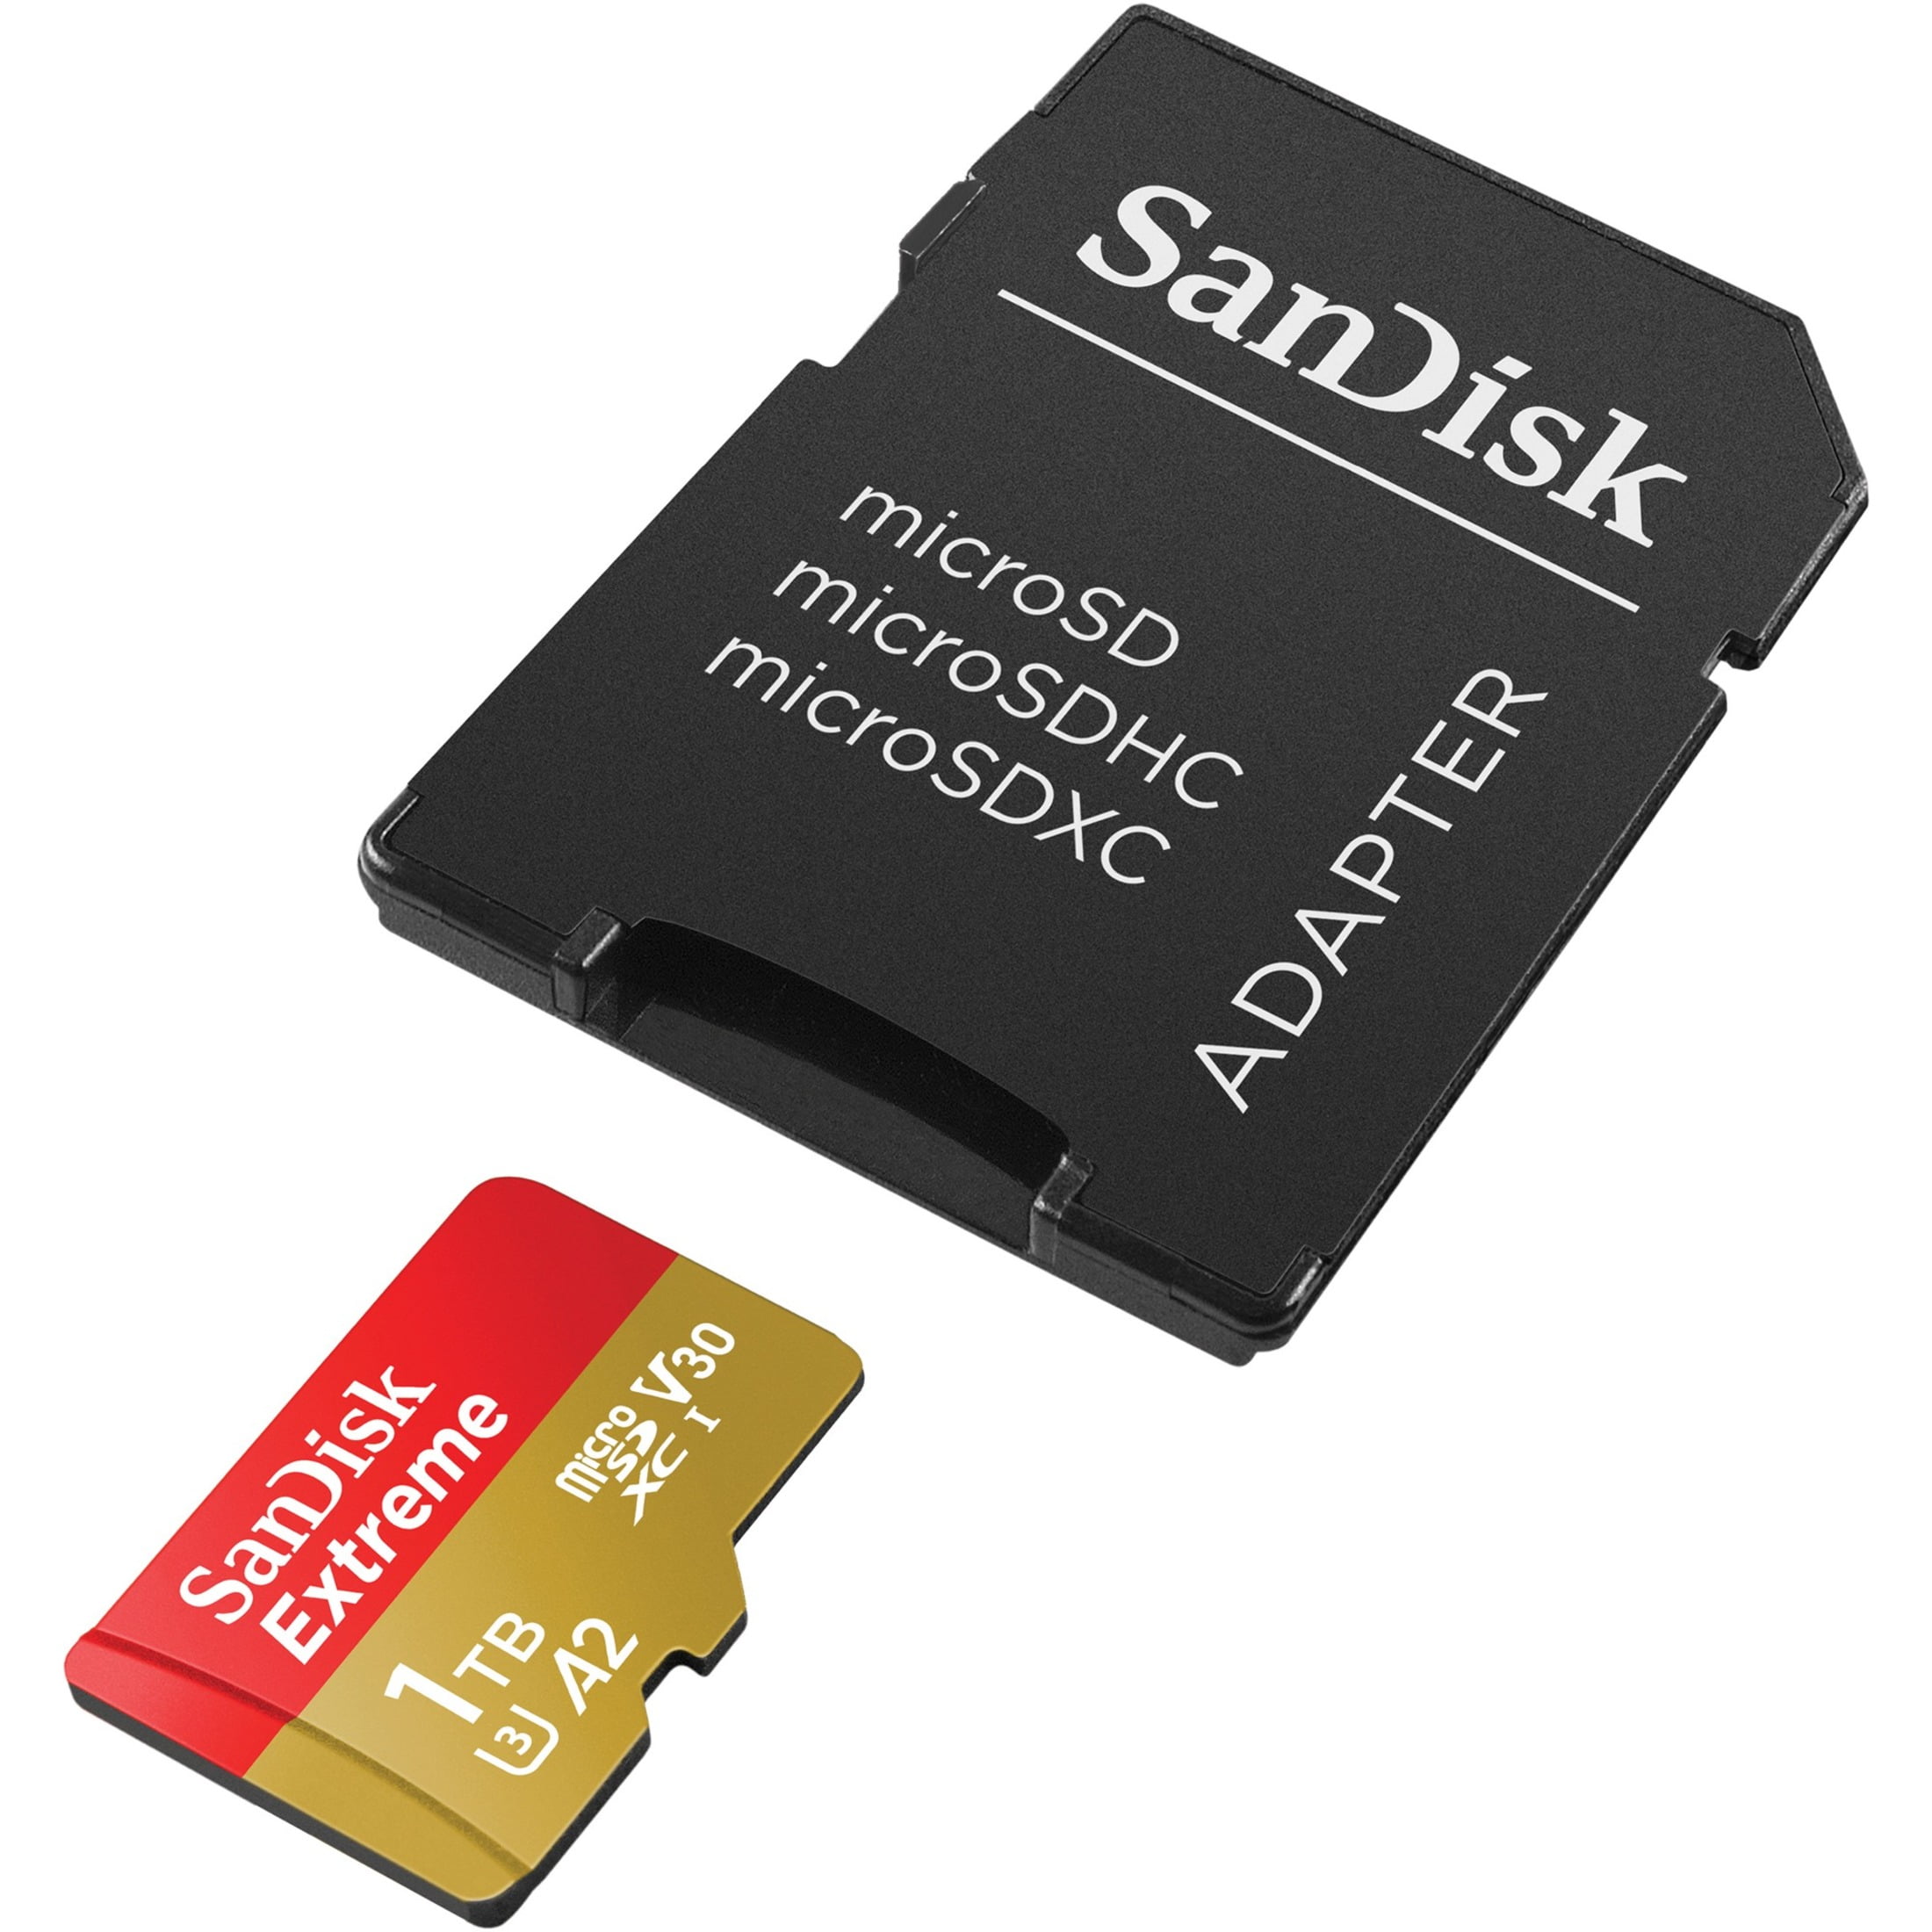 SANDISK ULTRA MICRO SD 16GB 32GB 64GB 128GB CLASS 10 SD SDHC MEMORY CARD & ADAPT 